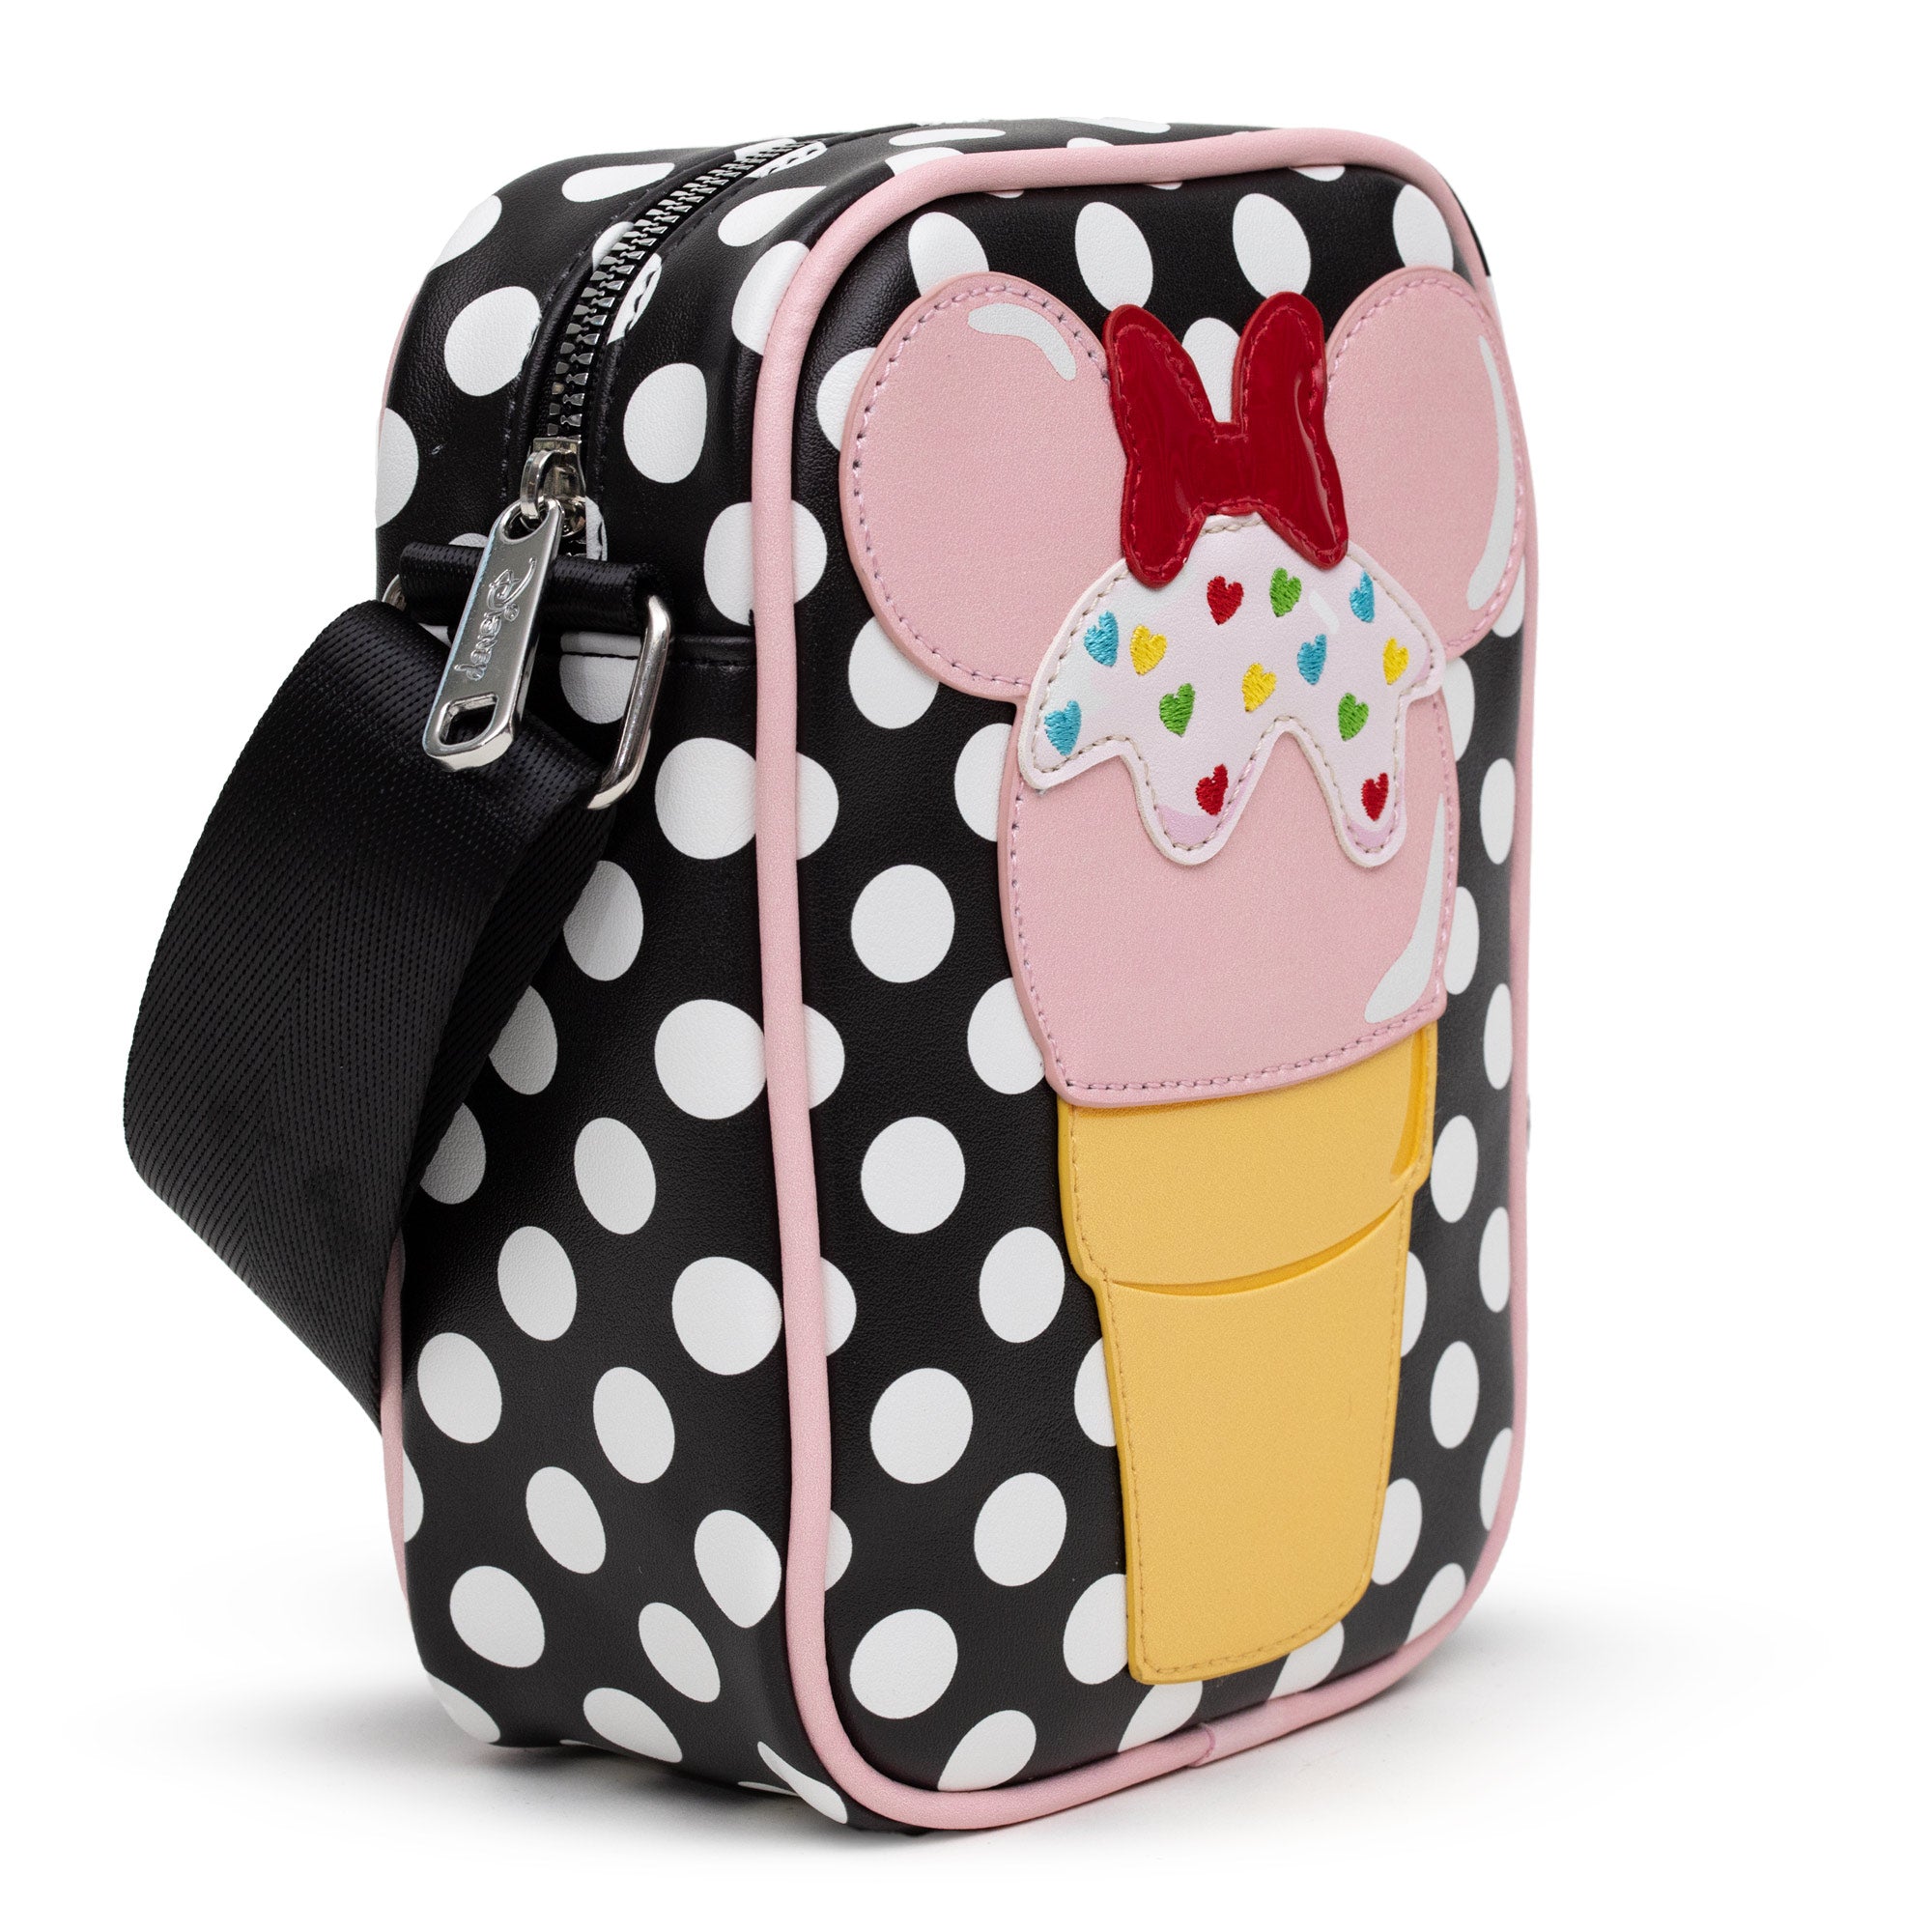 Disney Minnie Mouse Ice Cream Cone with Polka Dots Crossbody Bag